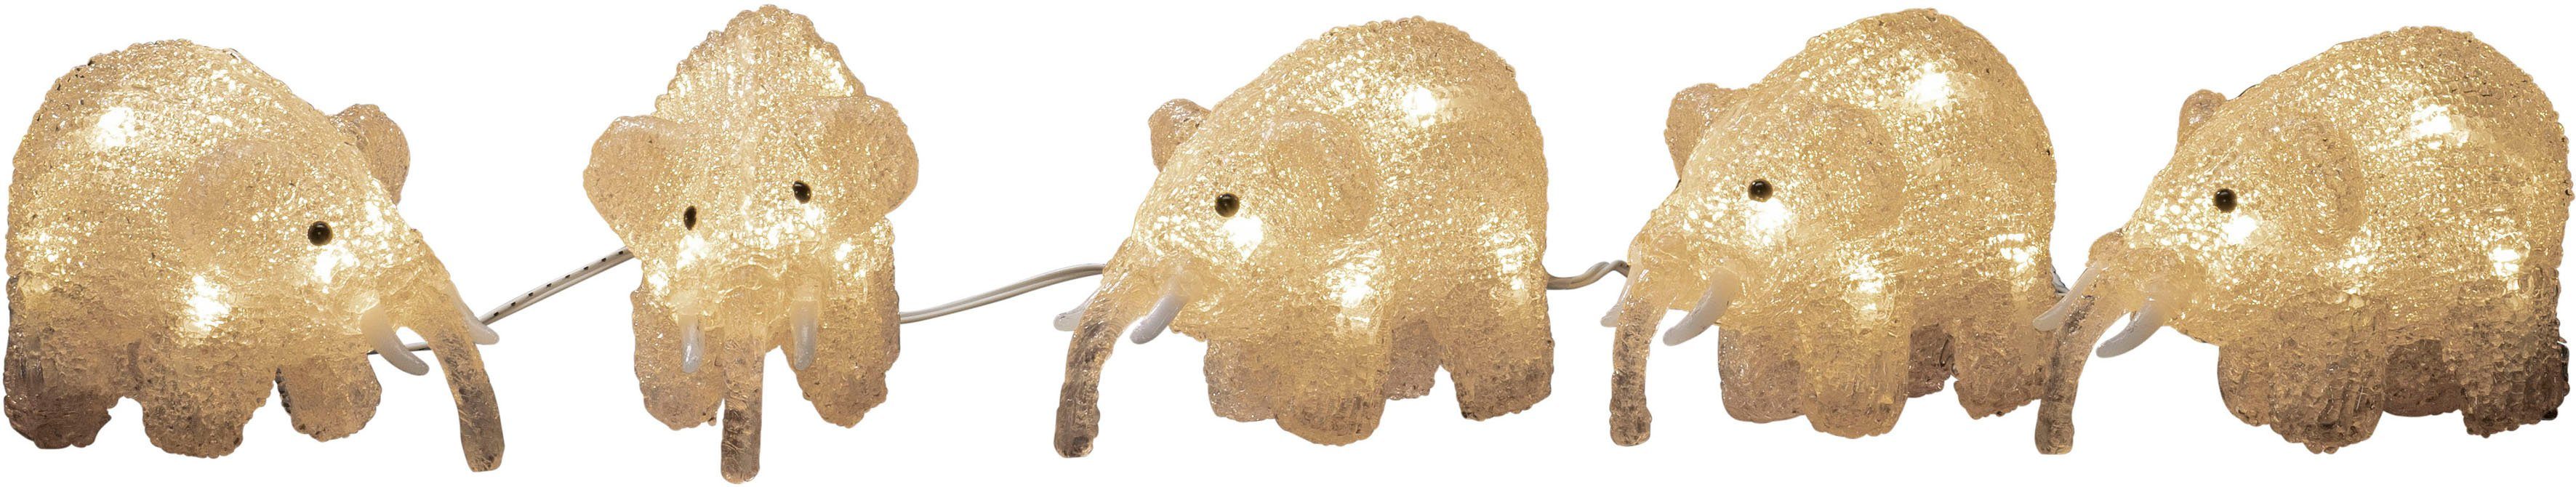 KONSTSMIDE Warmweiß fest Elefanten, weiße Dioden, integriert, LED LED Dekofigur 5er-Set, 40 warm LED Acryl